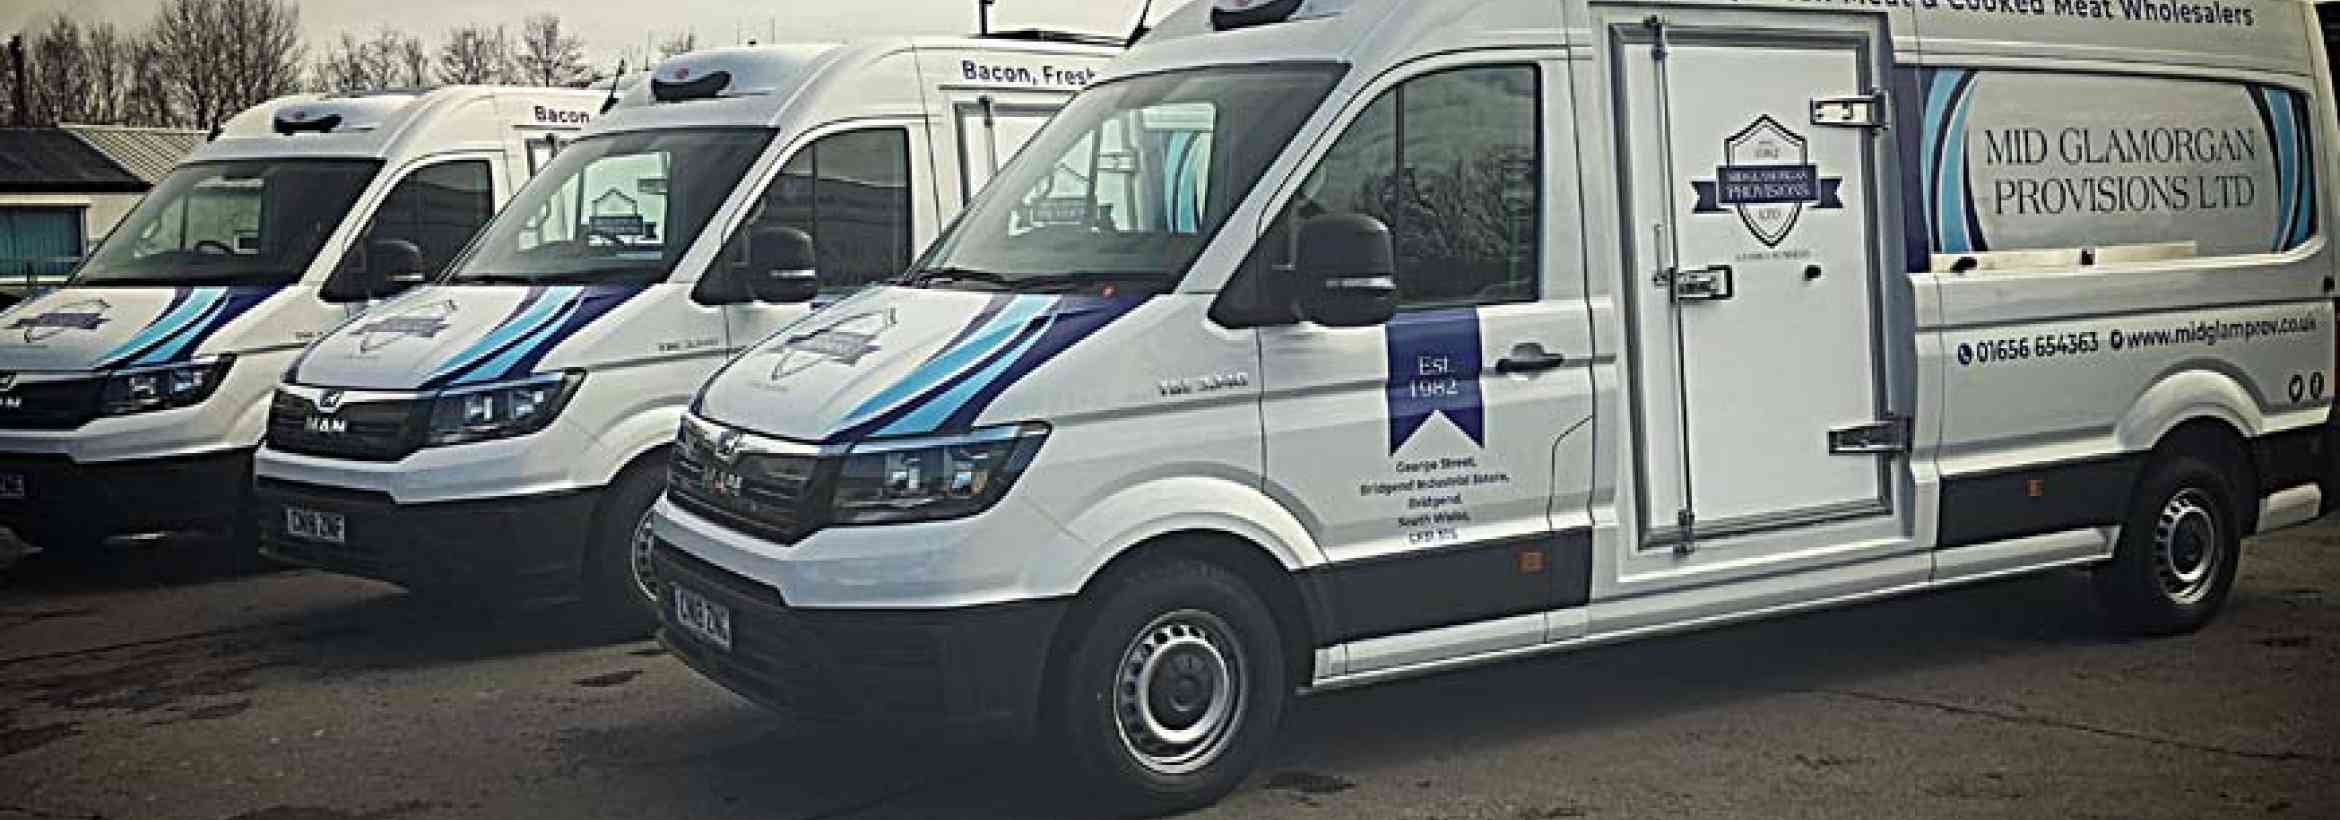 Mid Glamorgan Provisions take 3 brand new MAN TGE Fridge/Freezer Vans